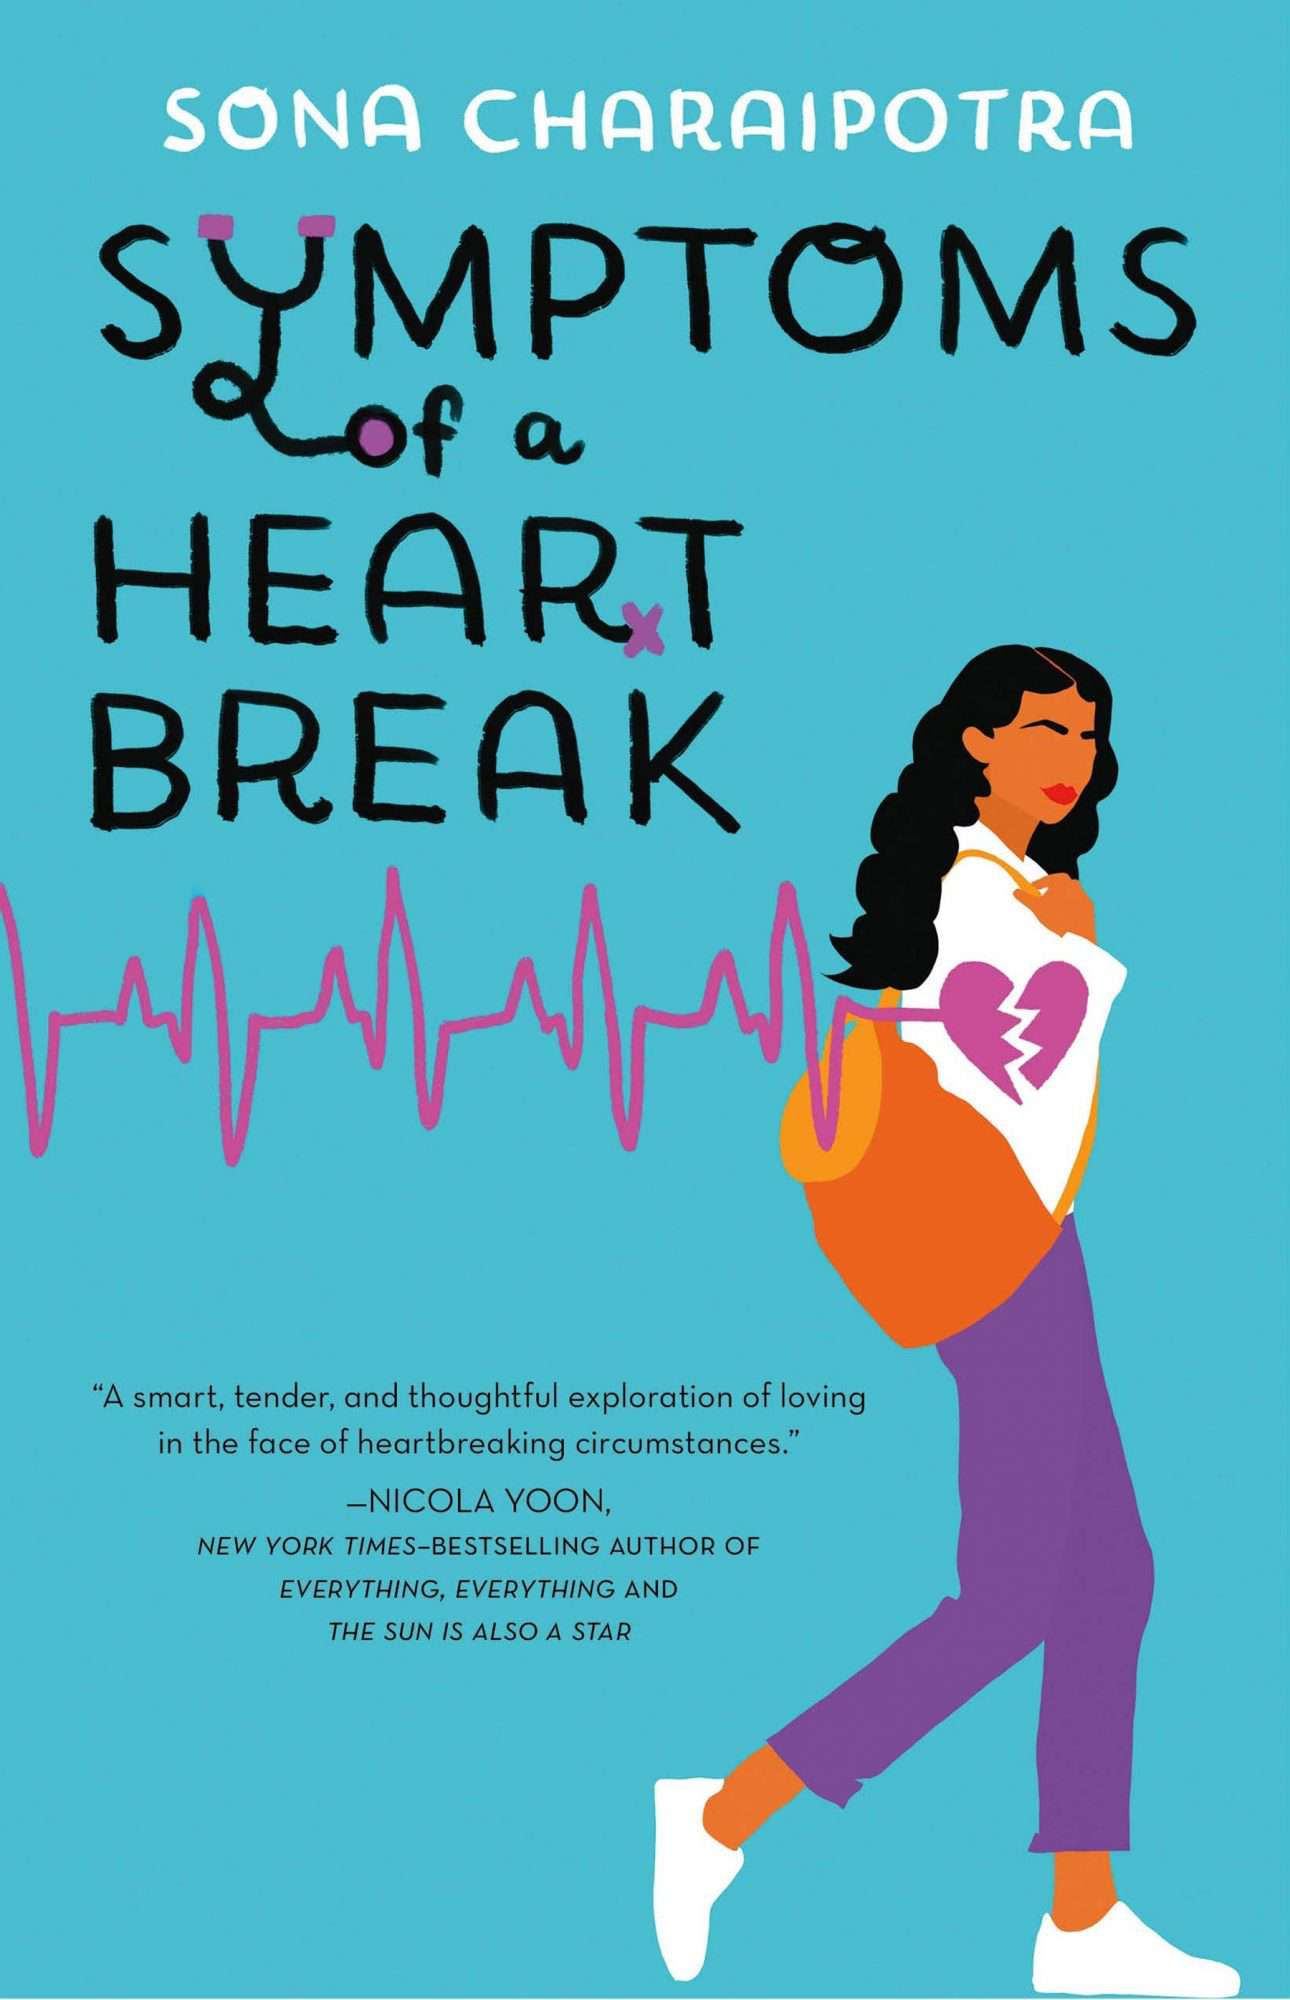 Symptoms of a Heartbreak by Sona CharaipotraPublisher: Imprint